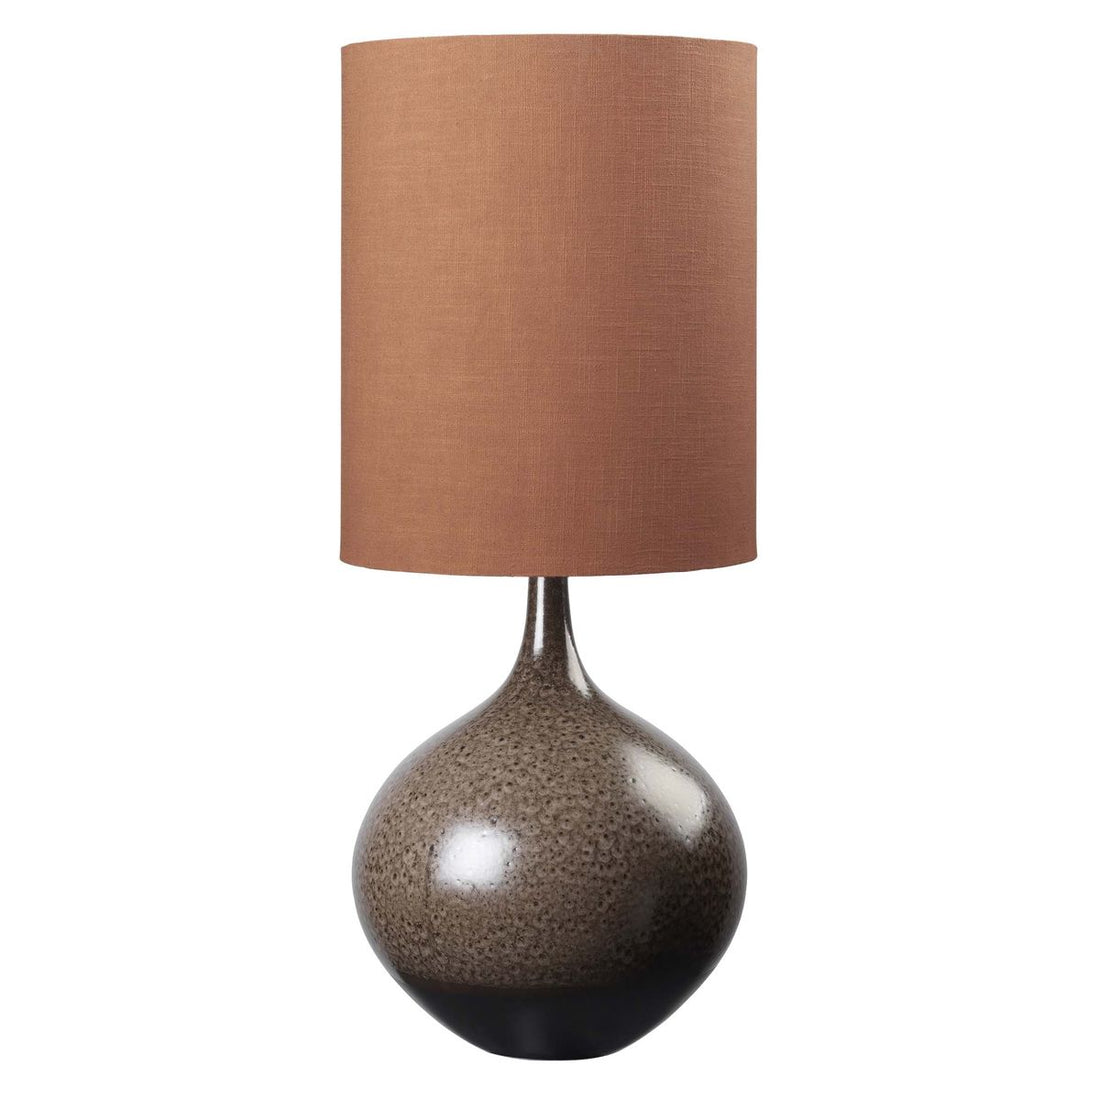 Cozy Living Bella Ceramic Lamp w. shade - COAL w. BURNED ORANGE SHADE